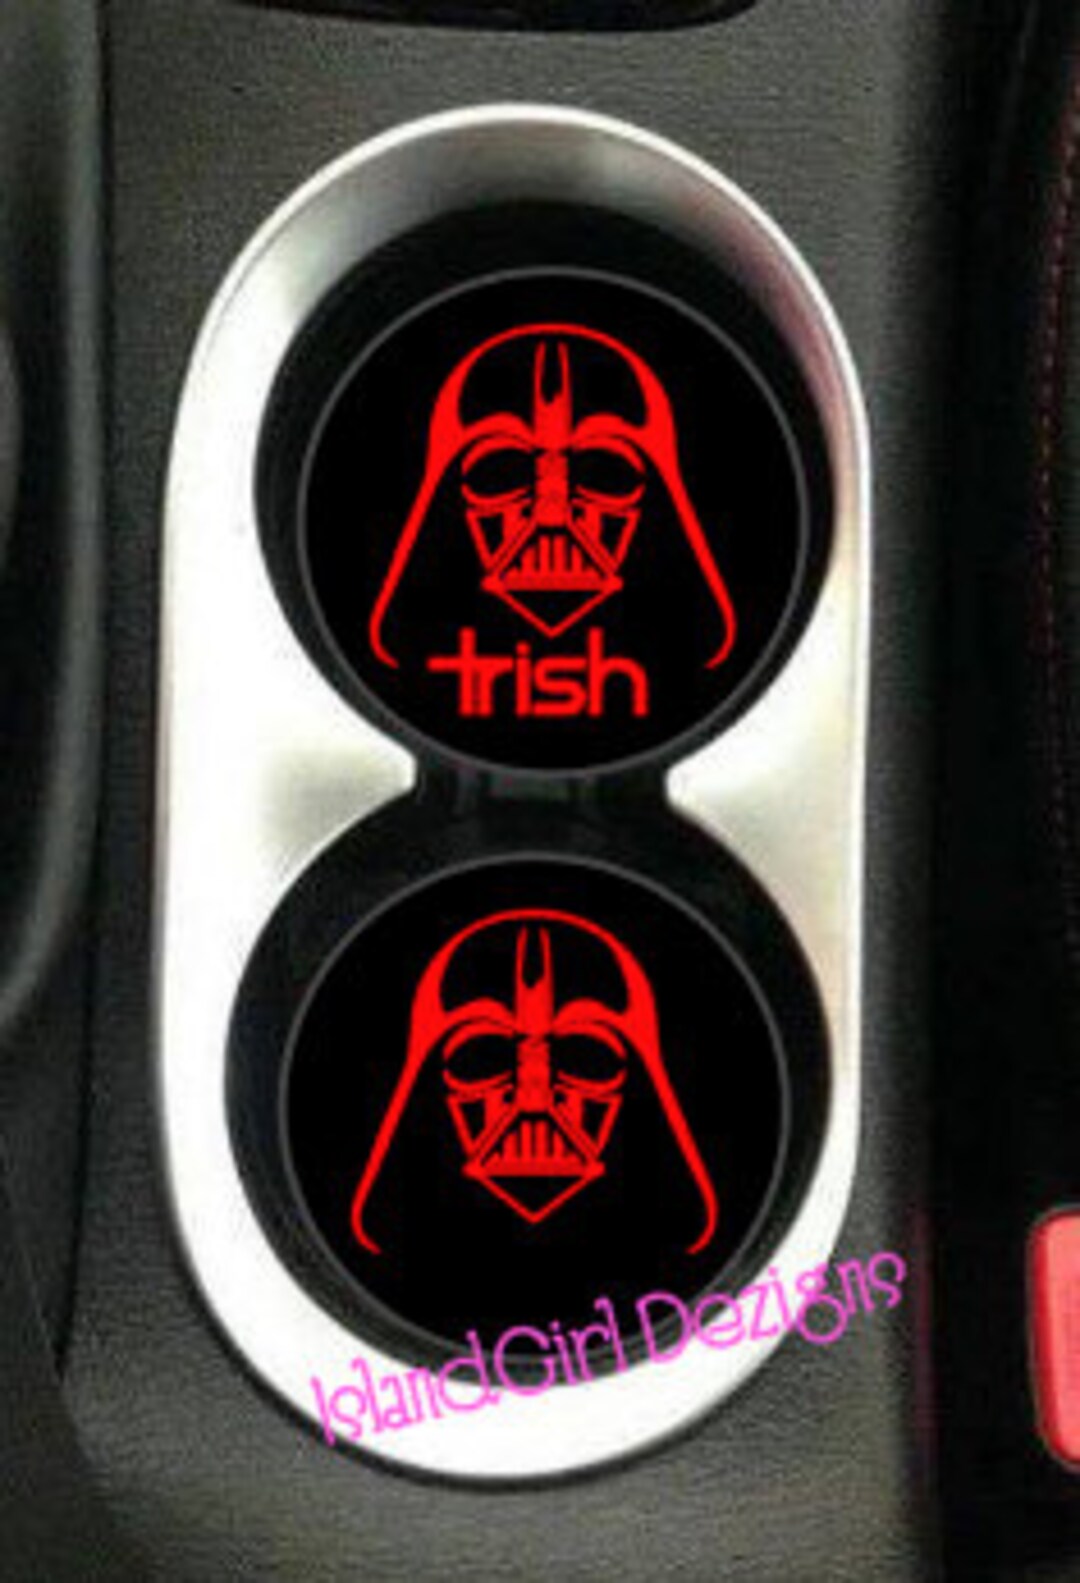 Star Wars Darth Vader Car Cup Holder Coaster 2-Pack